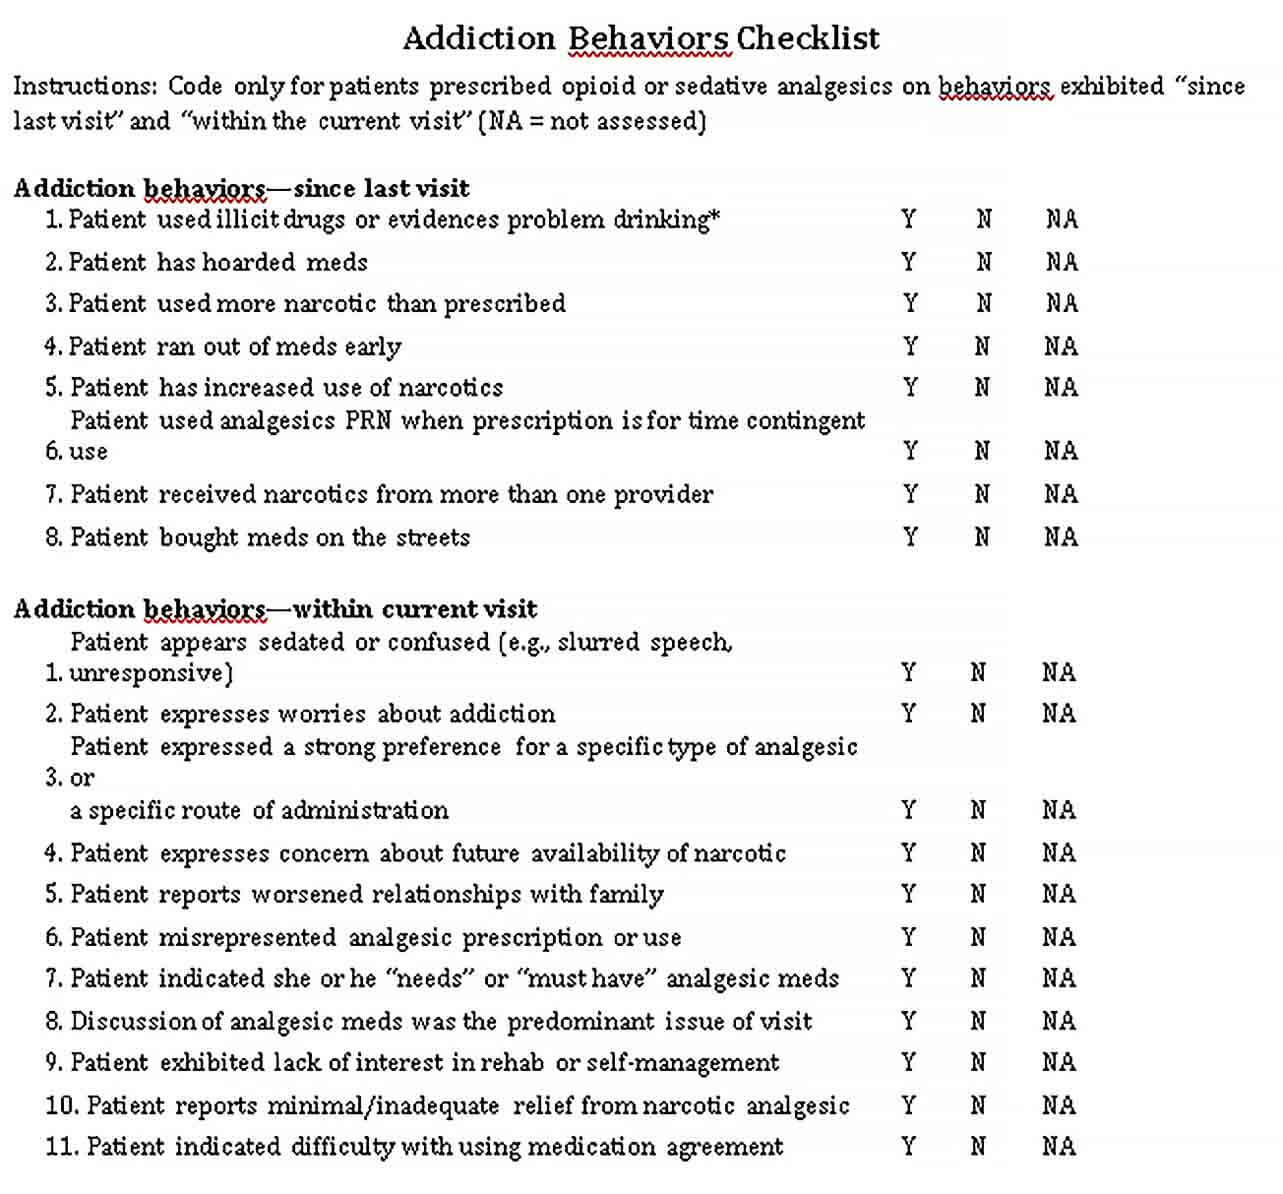 Sample Addiction Behavior Checklist